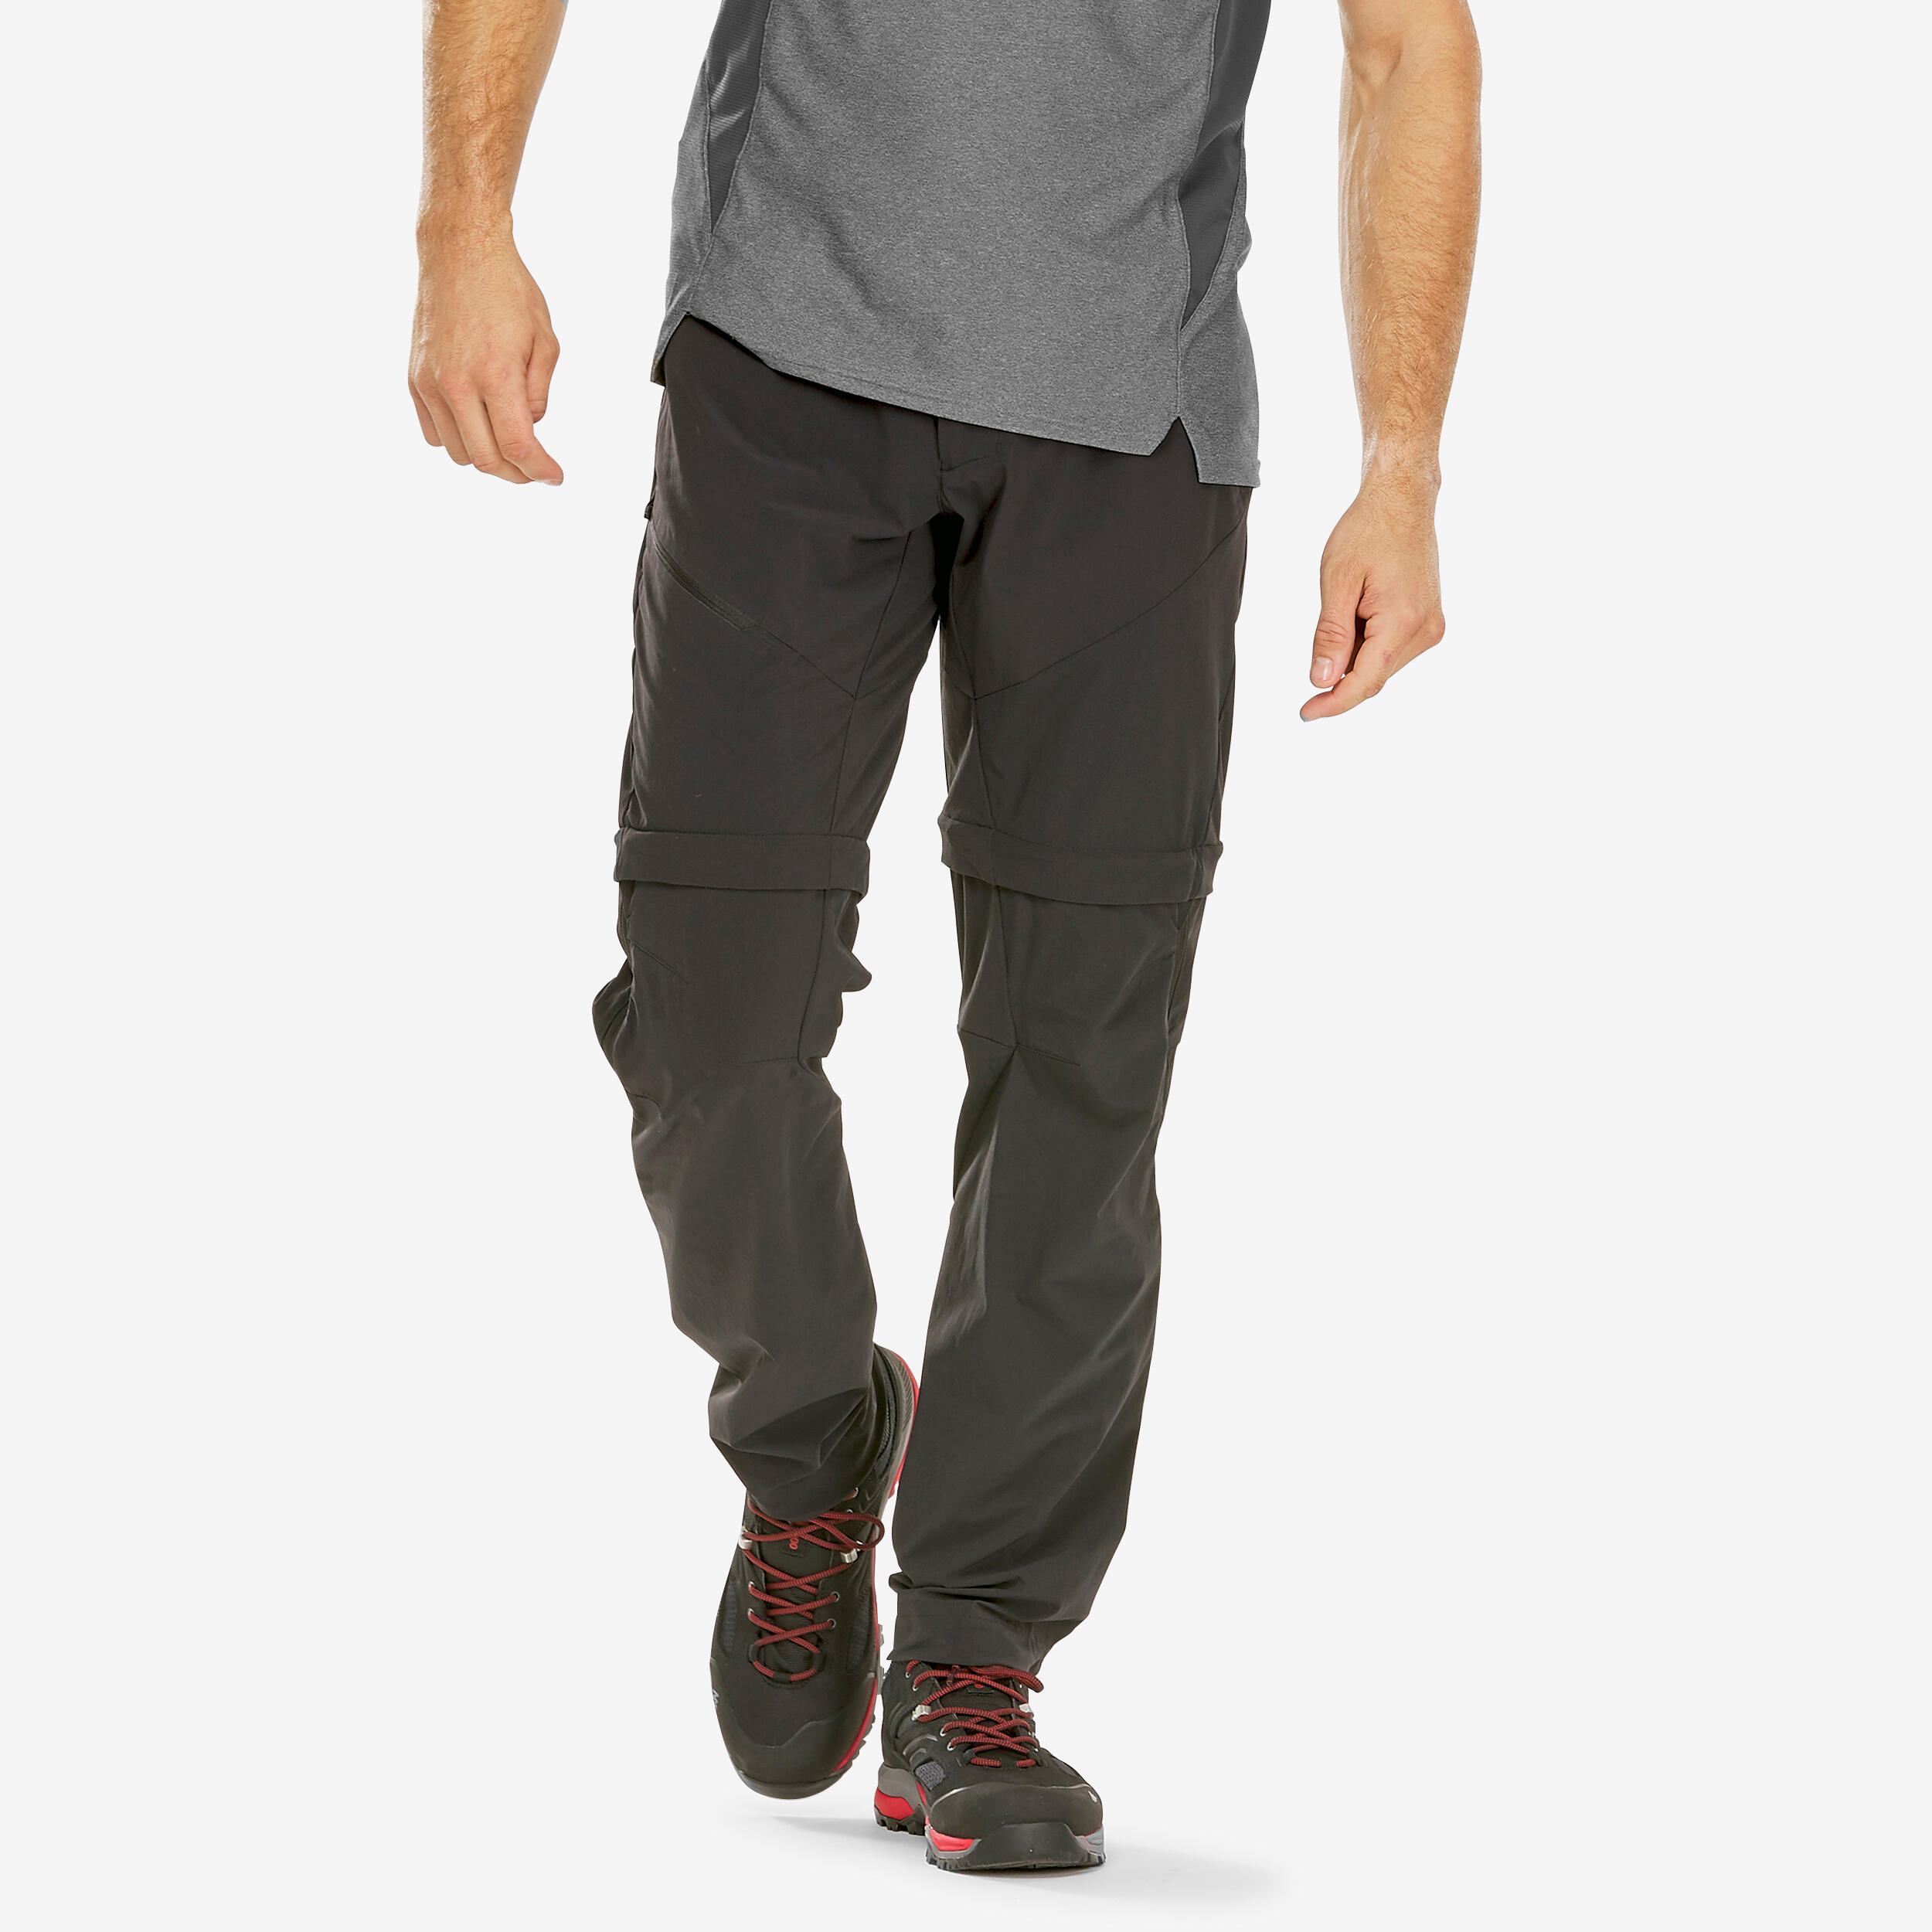 Men's 2-in-1 Hiking Pants - MT 500 - Carbon grey, black - Forclaz 